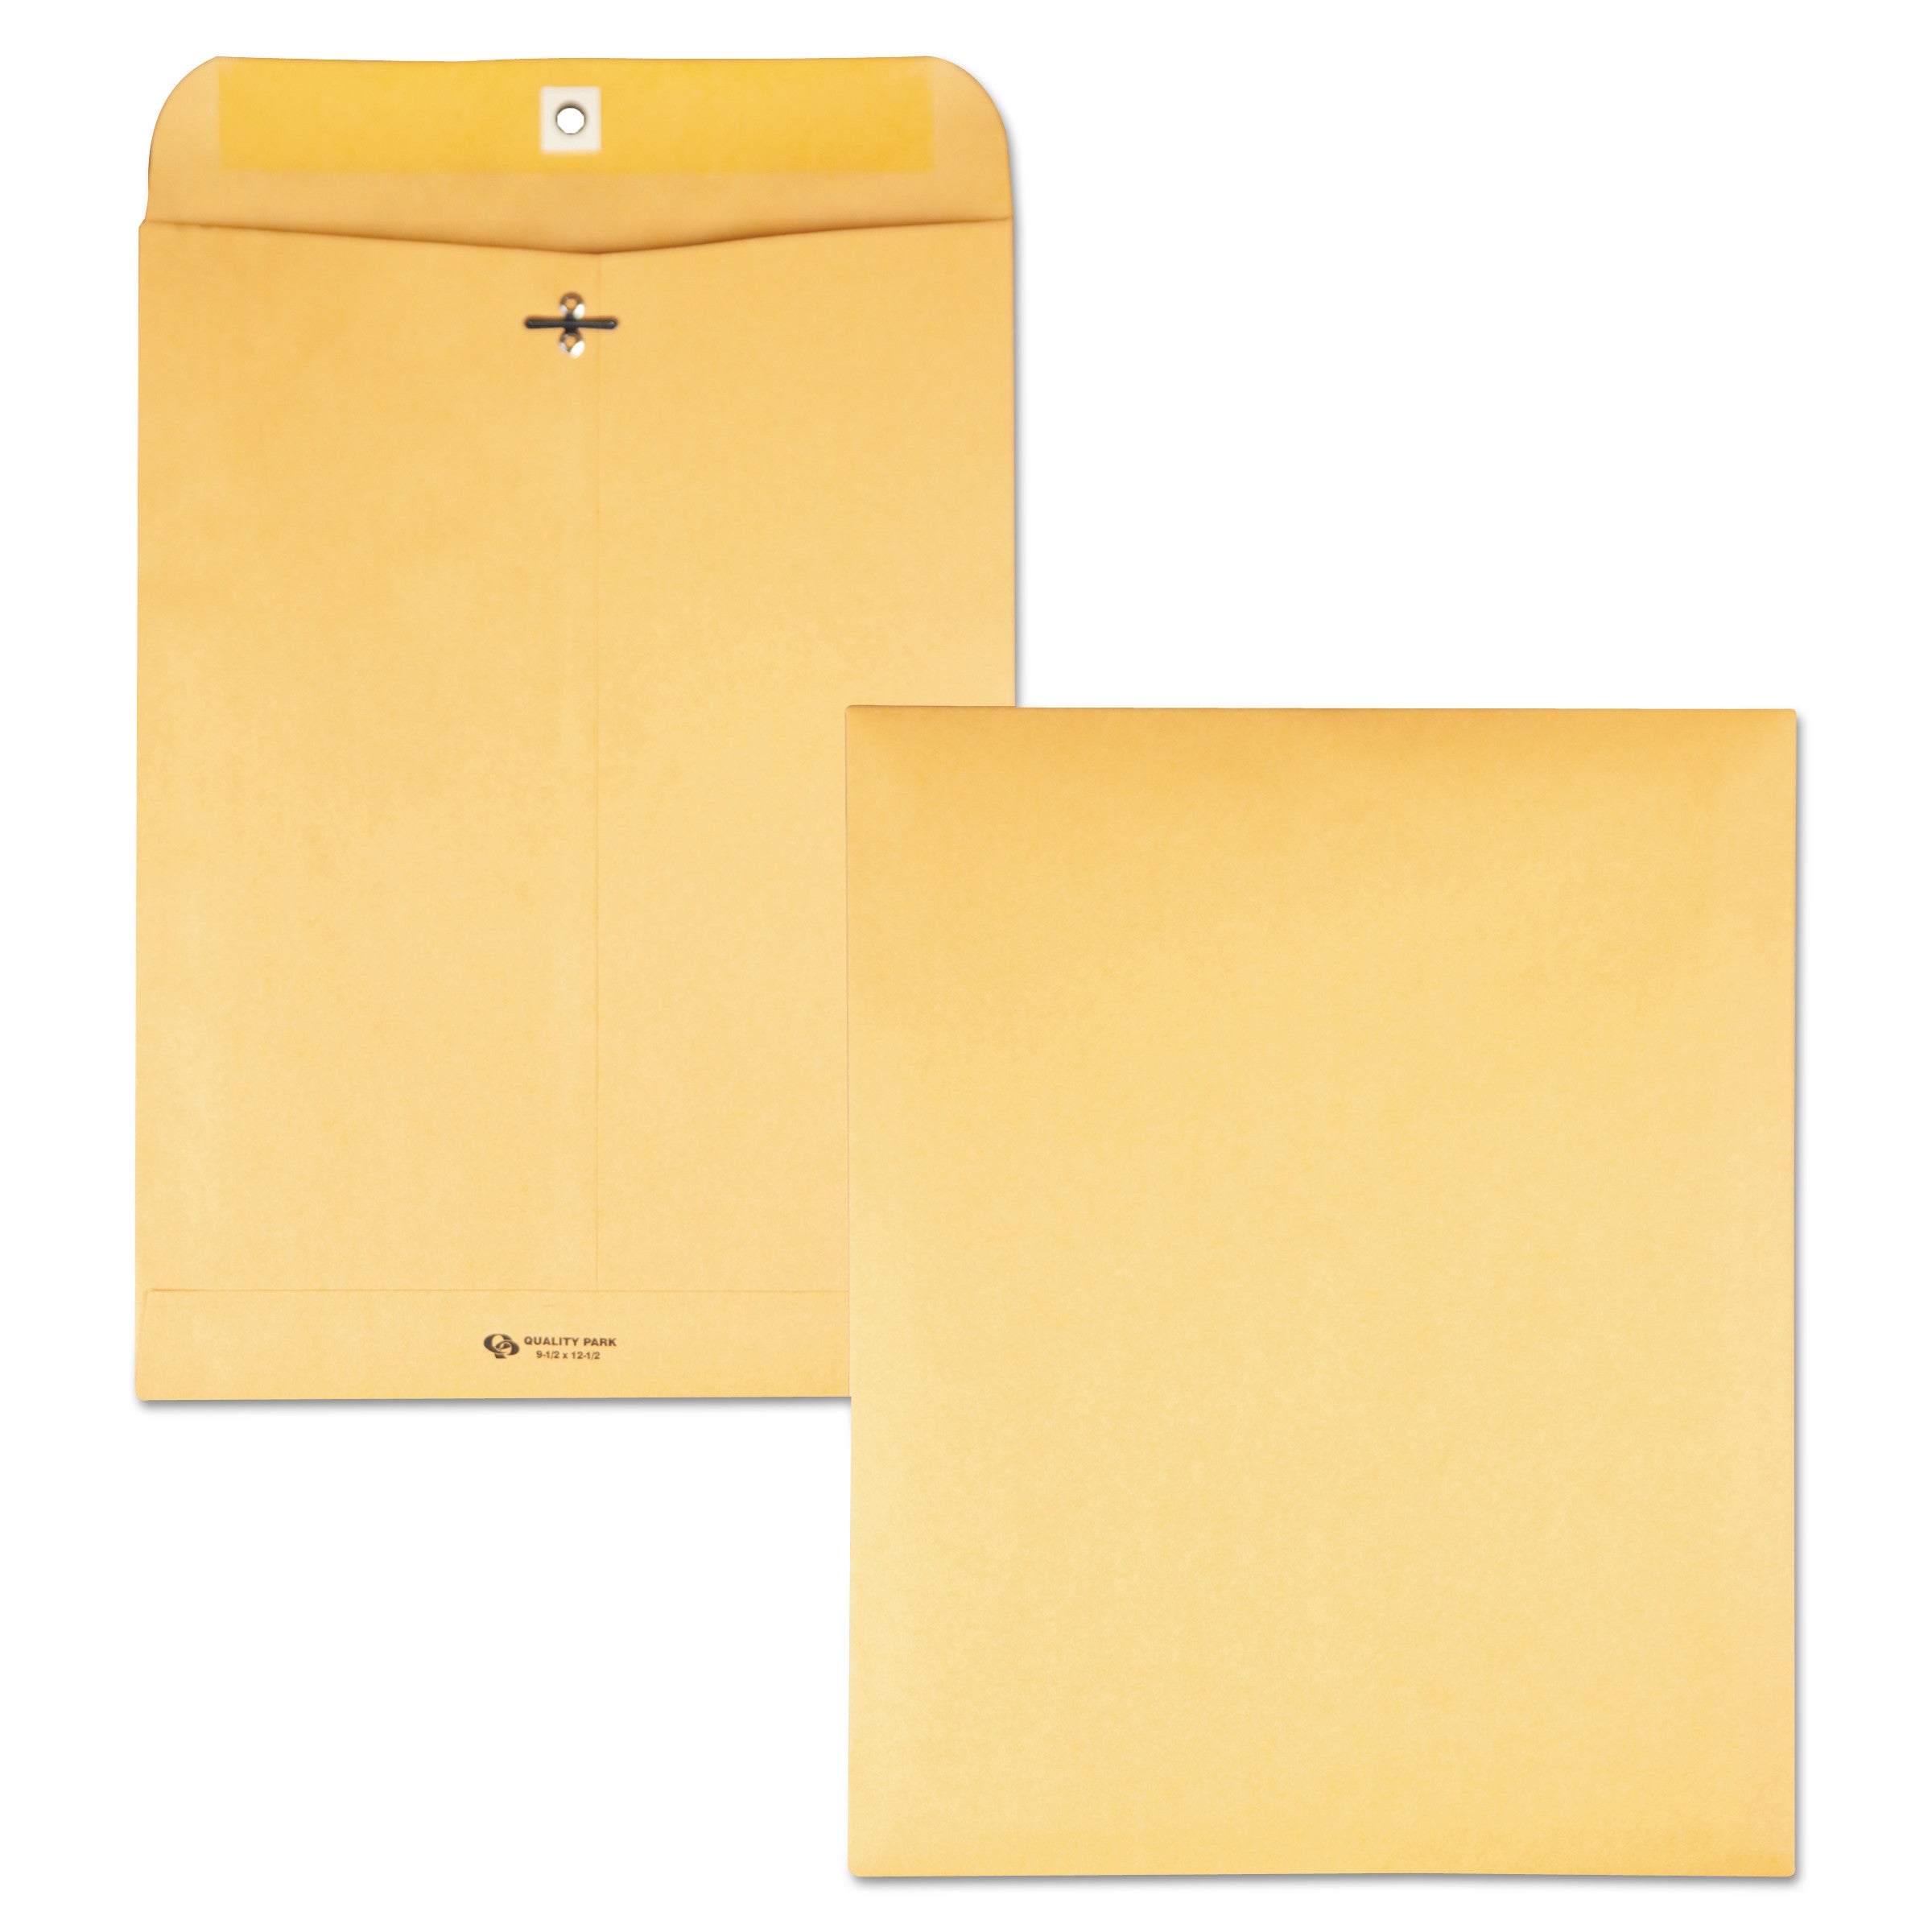 Clasp Envelope, 28 lb Bond Weight Kraft, #93, Square Flap, Clasp/Gummed Closure, 9.5 x 12.5, Brown Kraft, 100/Box - 